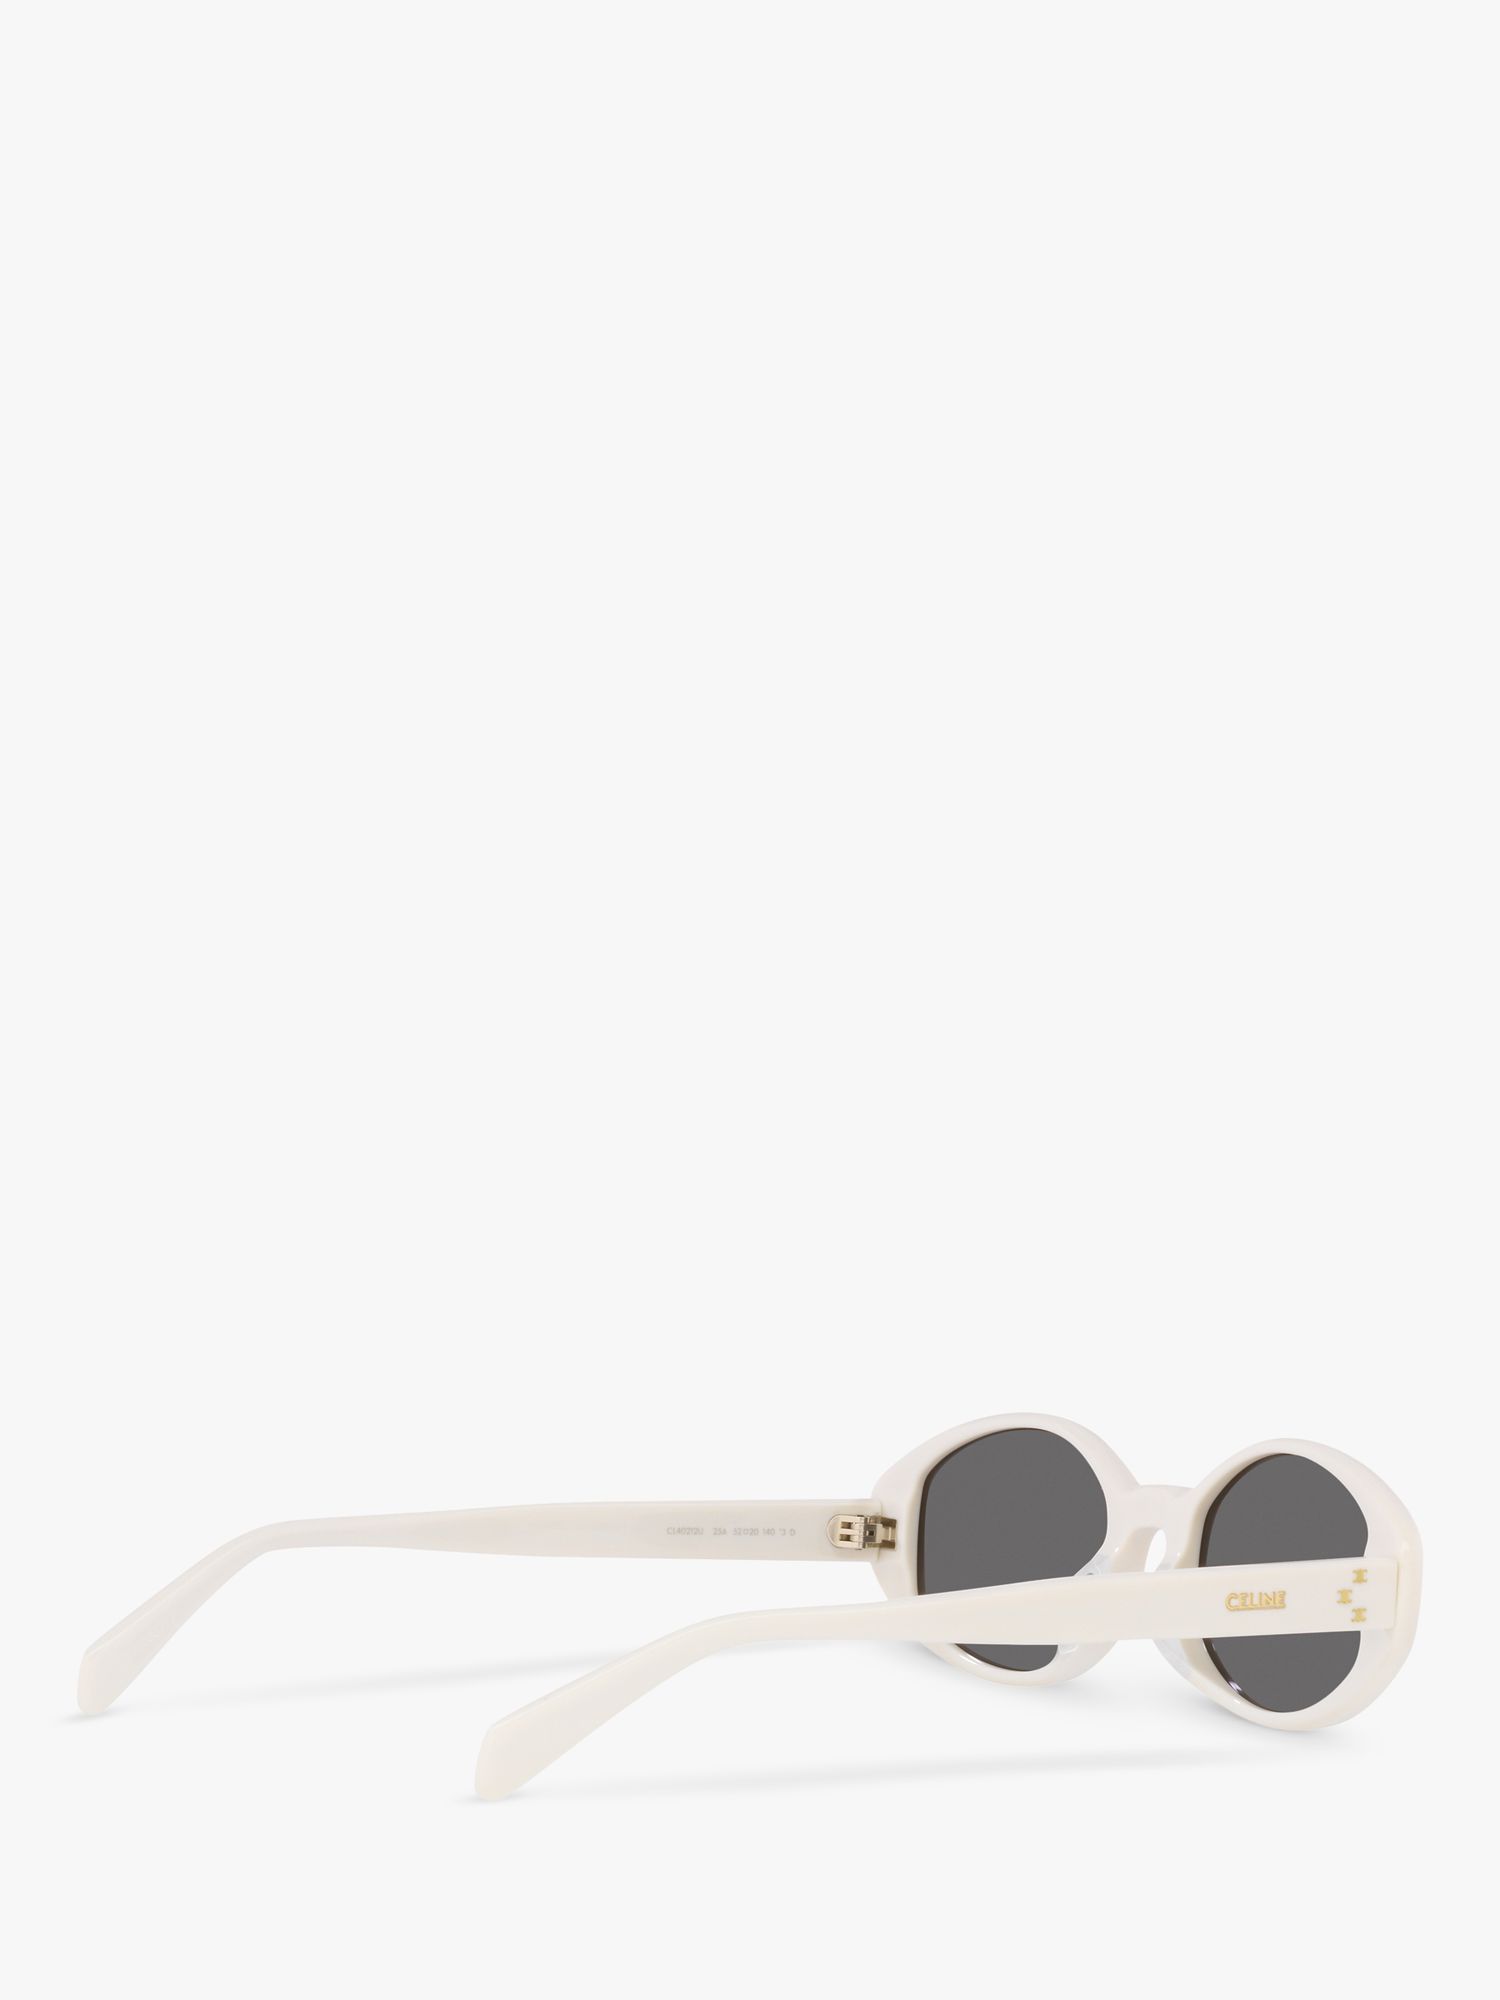 Celine CL40212U Women's Oval Sunglasses, Ivory/Grey at John Lewis ...